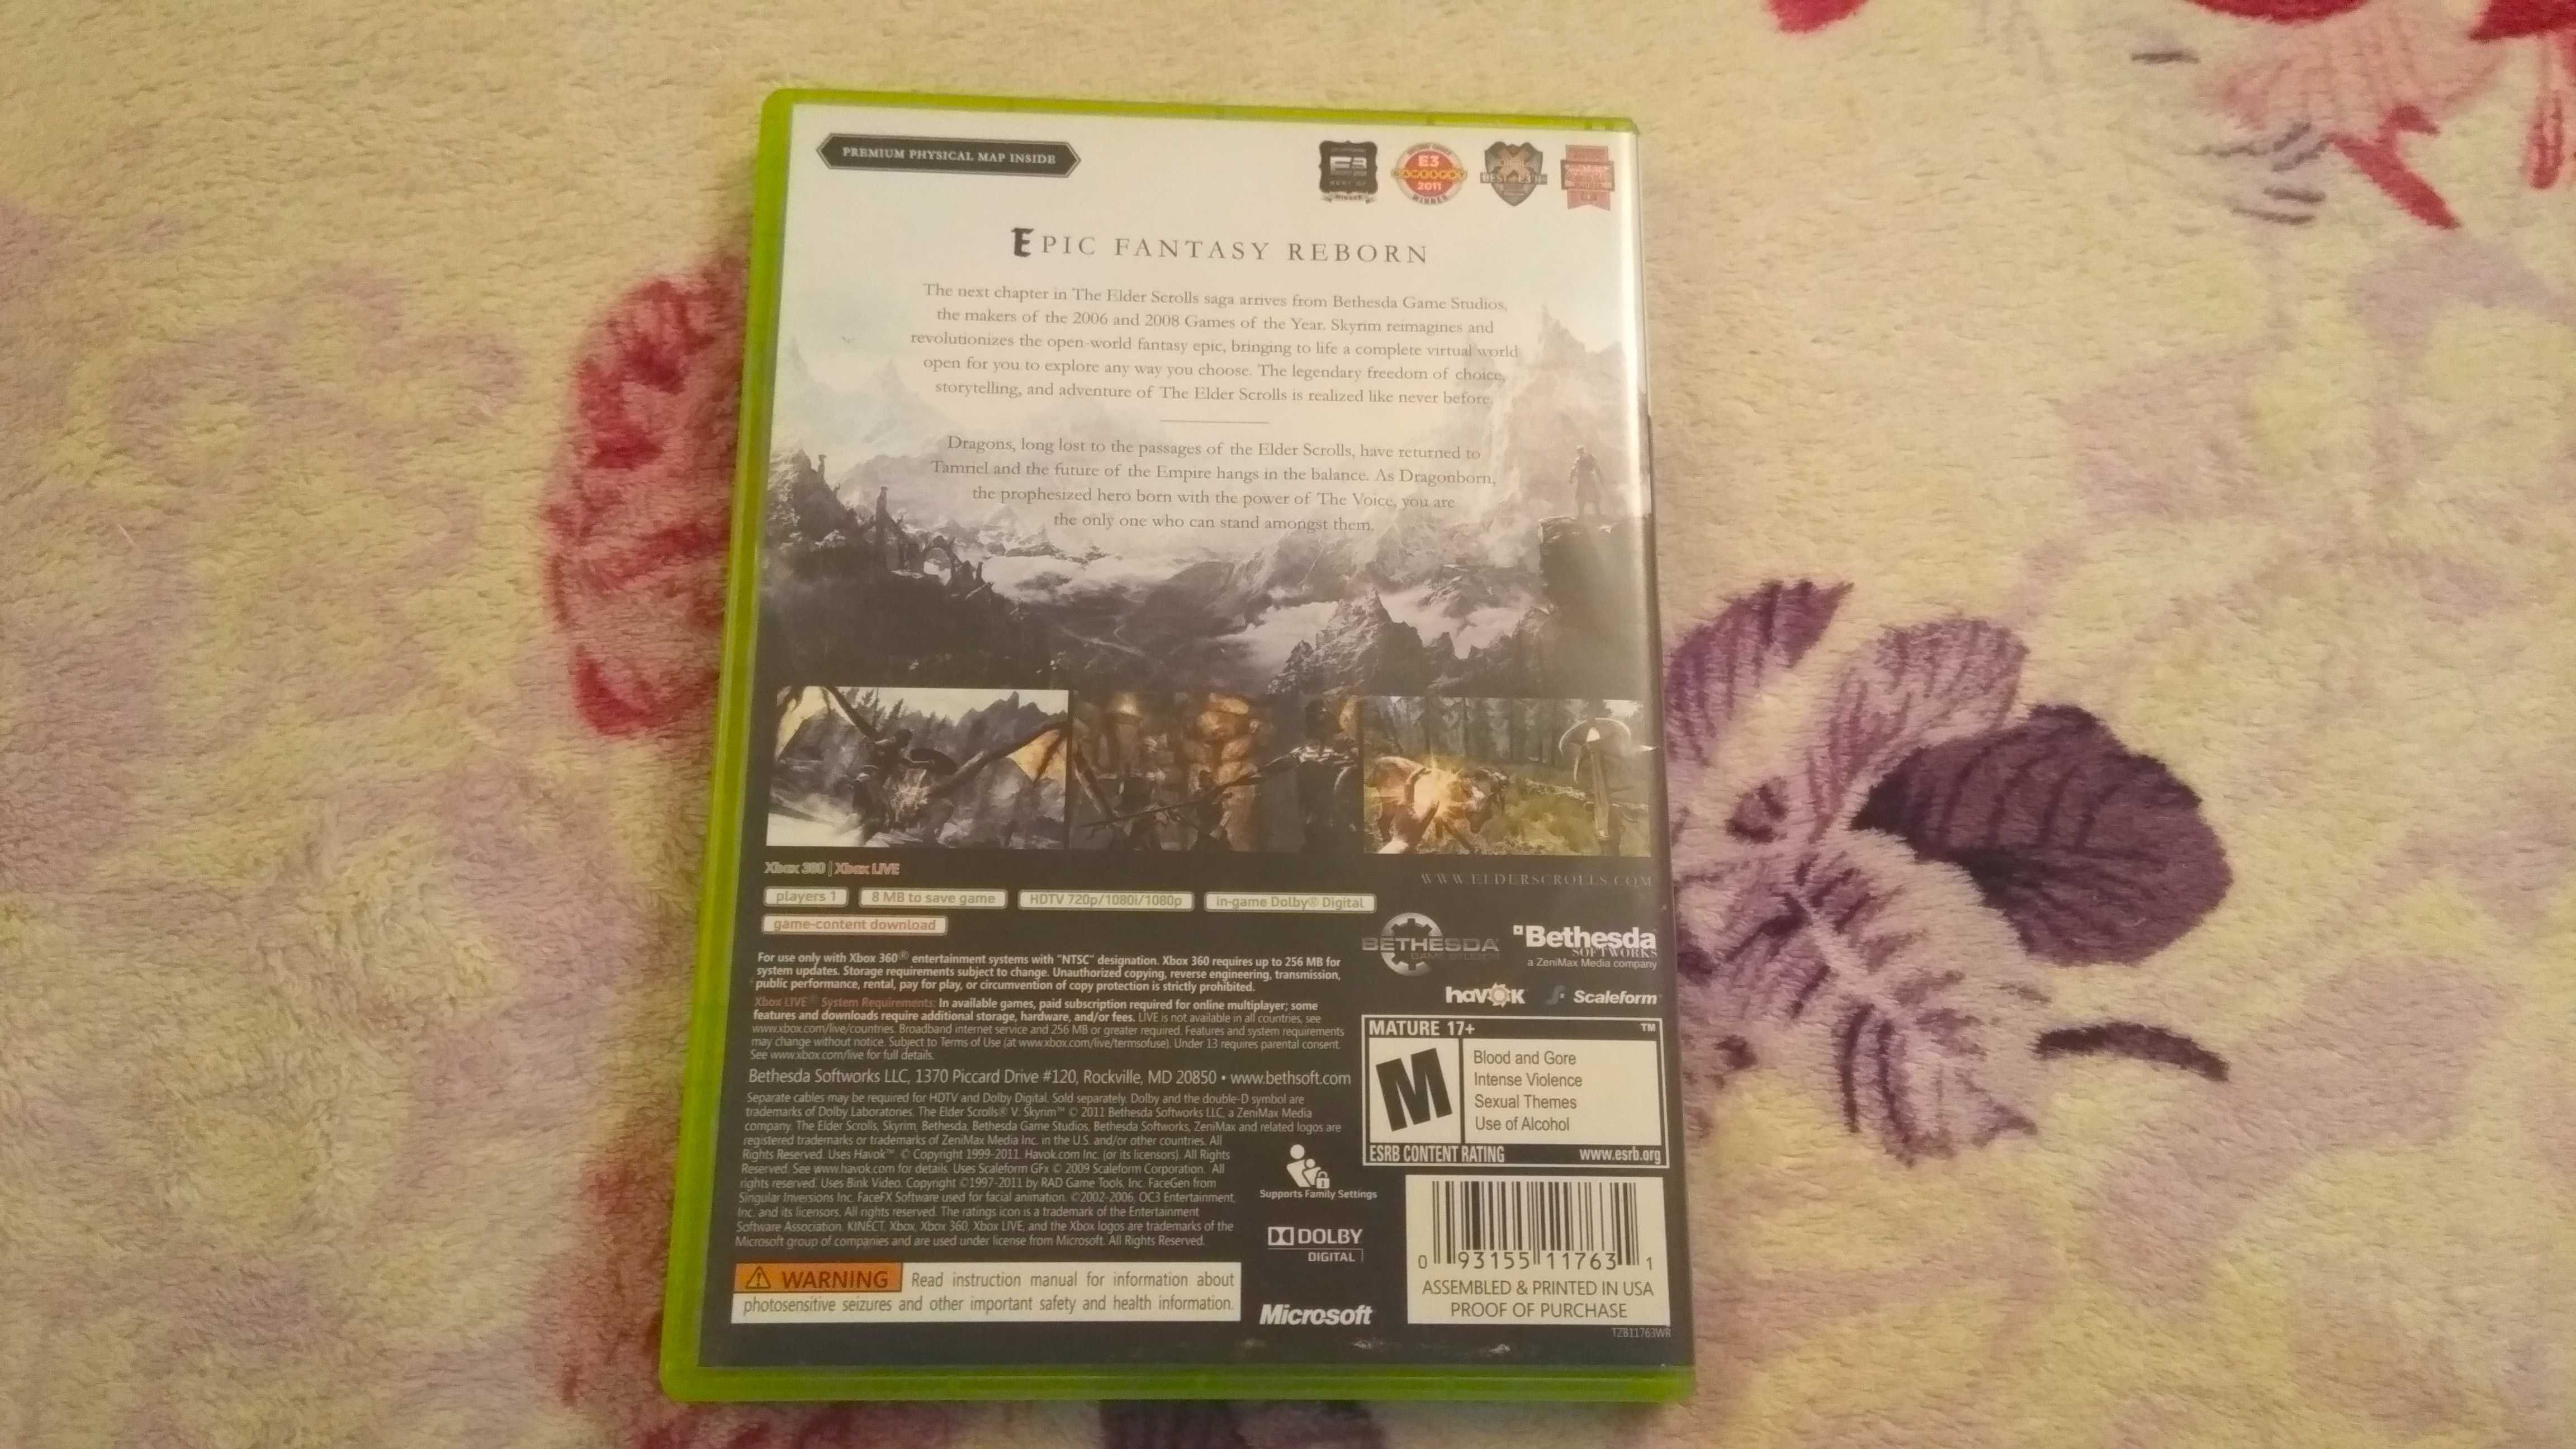 [ Xbox 360 ] The Elder Scrolls V - Skyrim, Лицензия